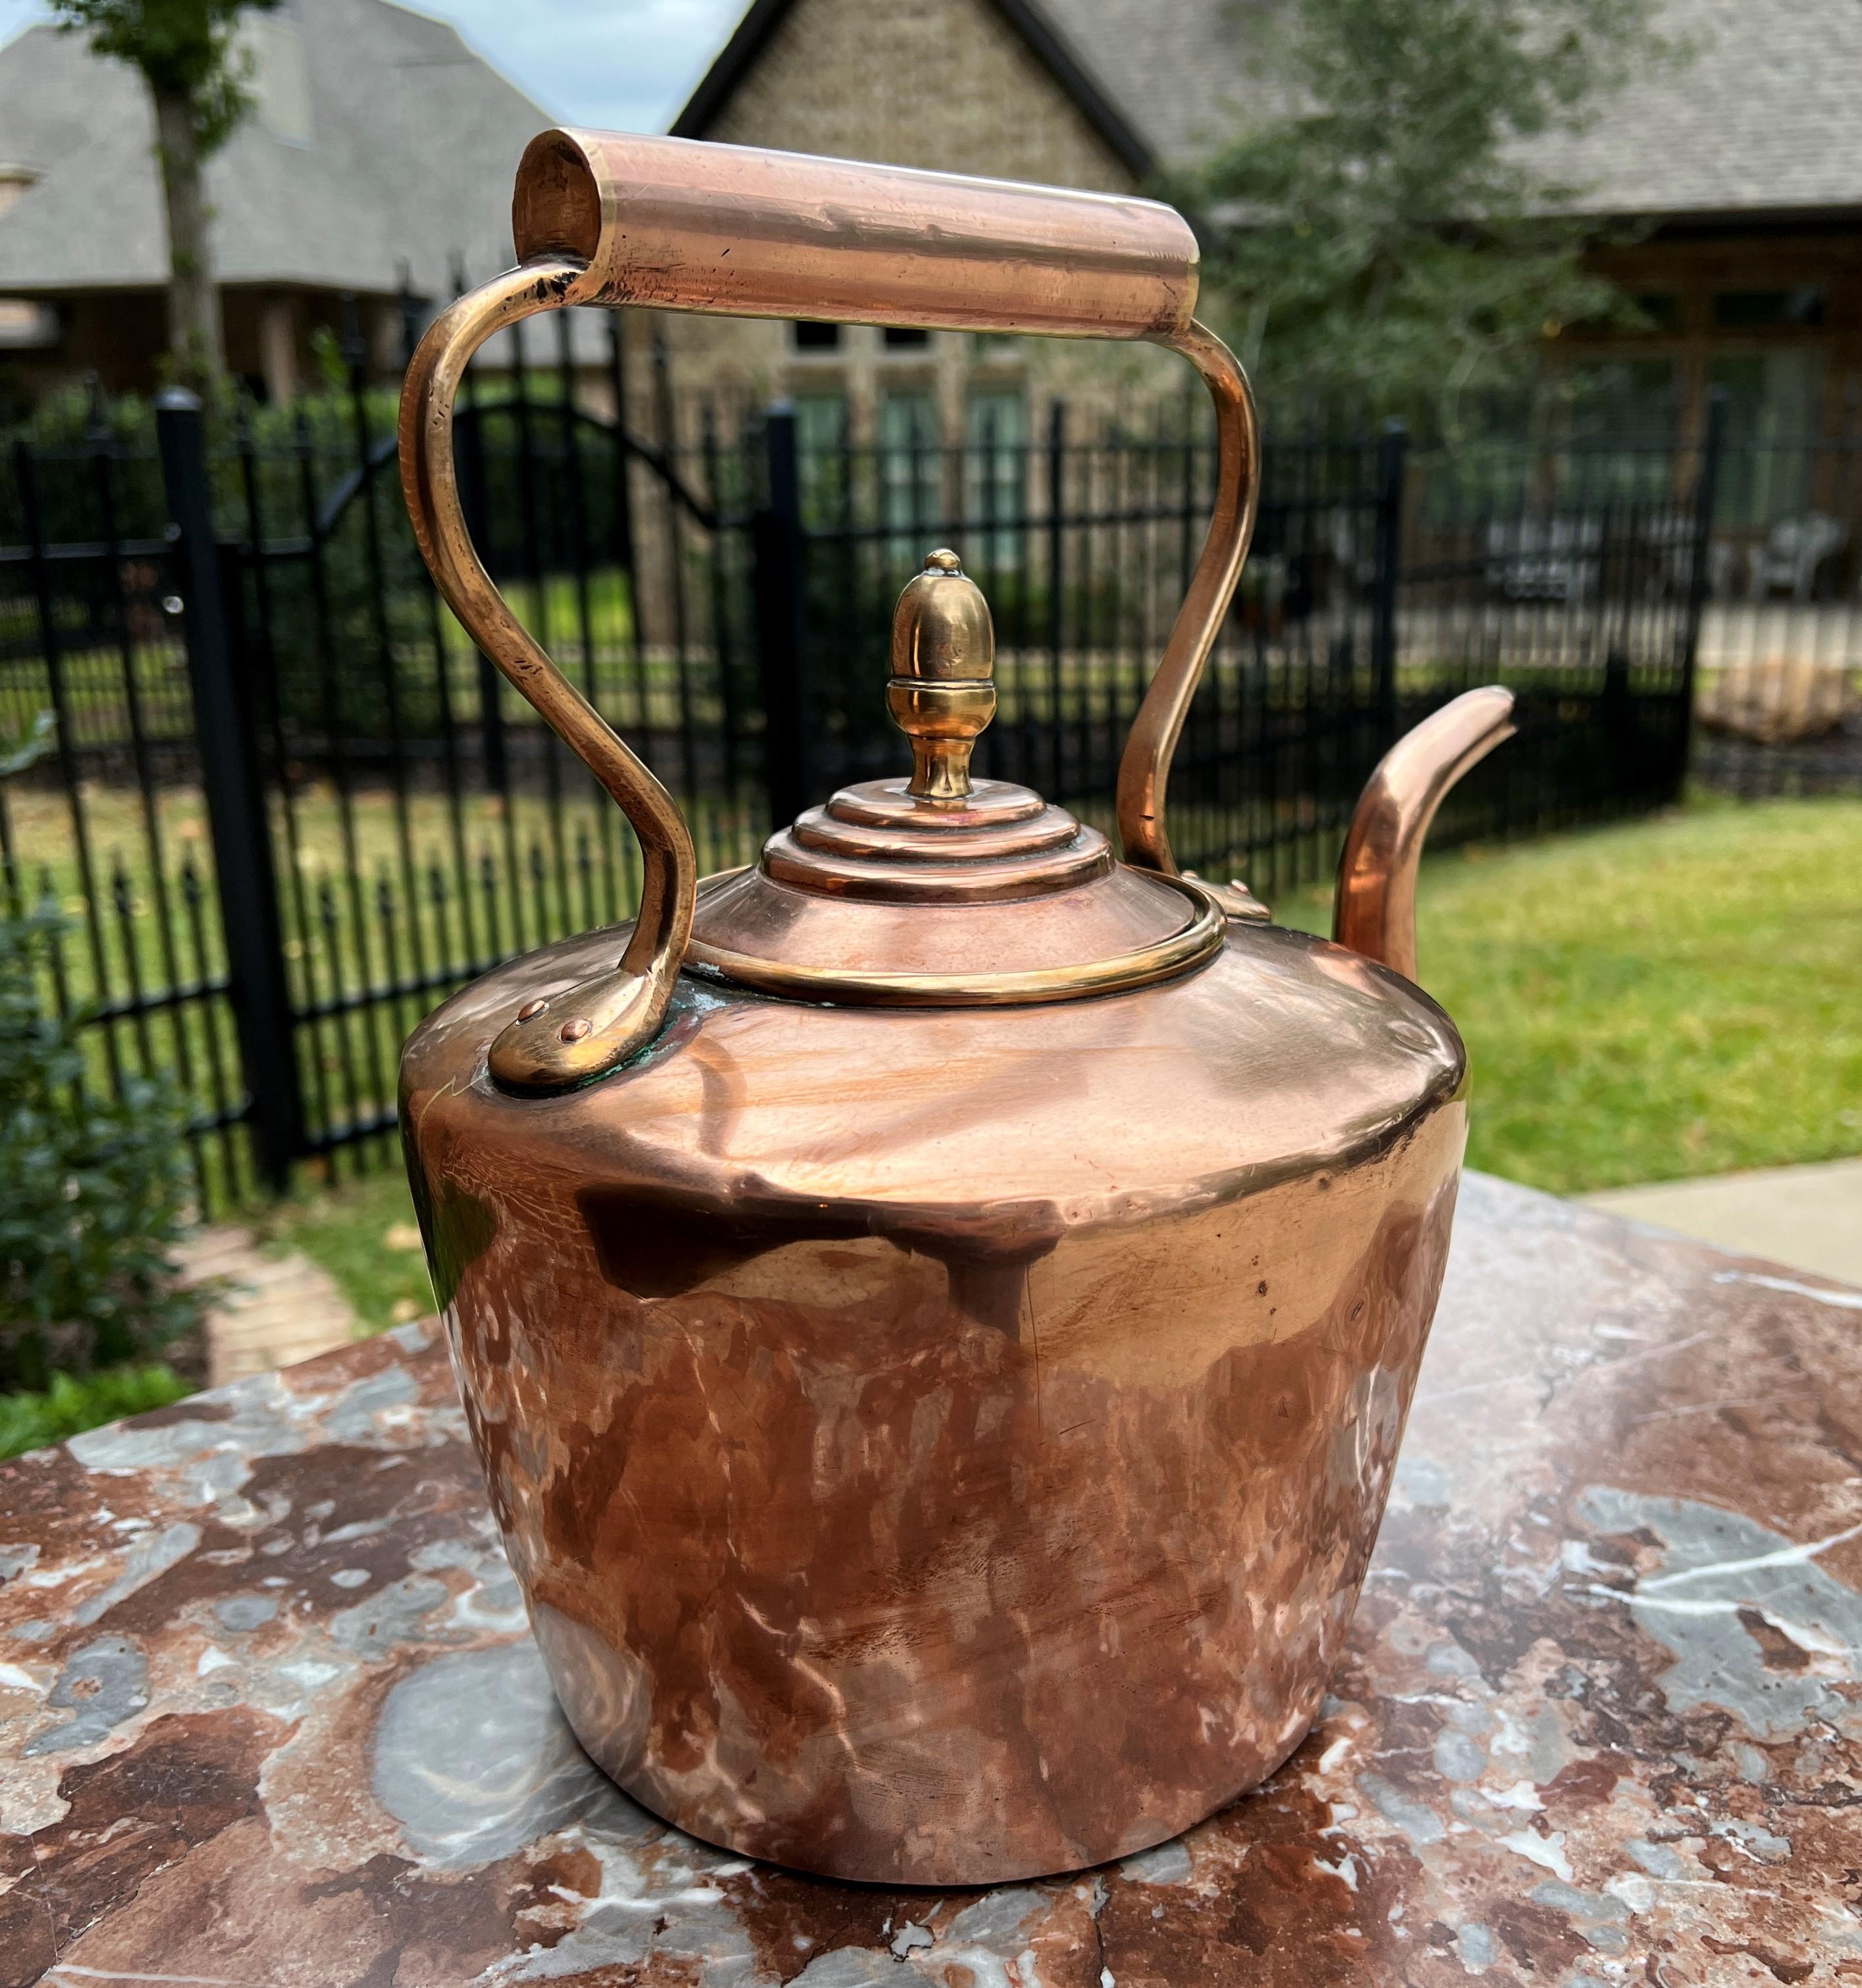 British Colonial Antique English Copper Brass Tea Kettle Coffee Pitcher Spout Handle #3 c. 1900